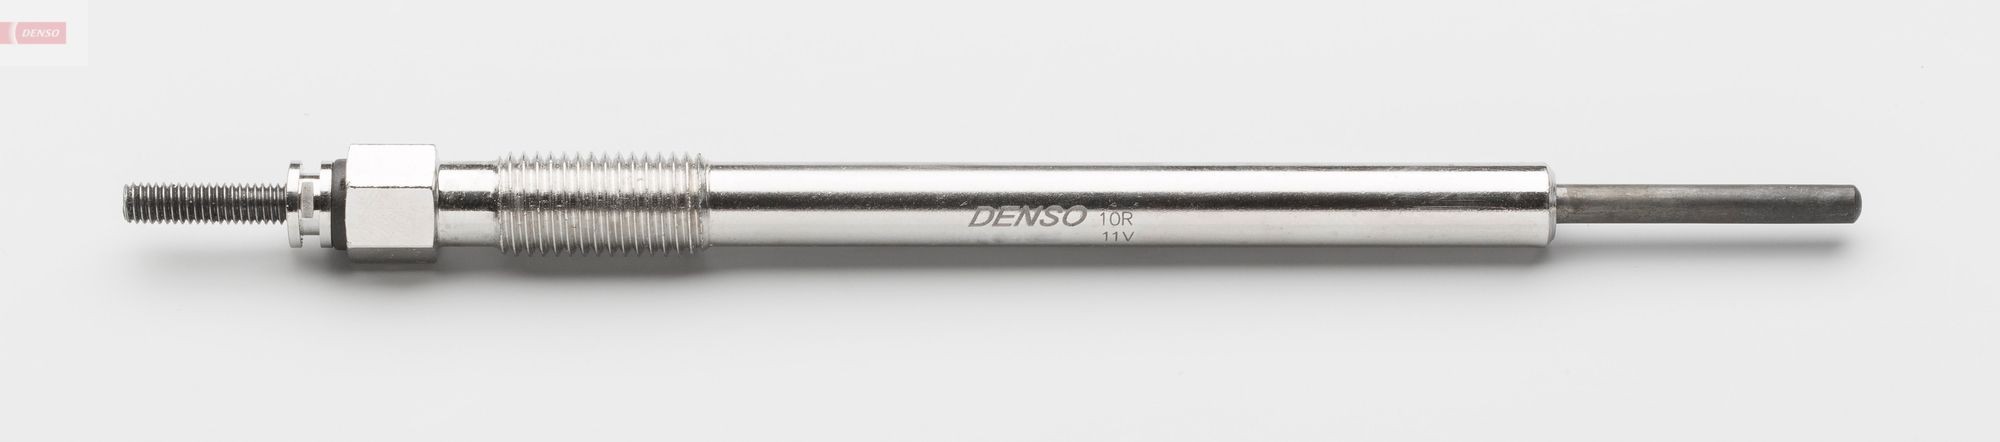 DENSO DG-600 Kaitinimo žvakės 11V M10x1.25